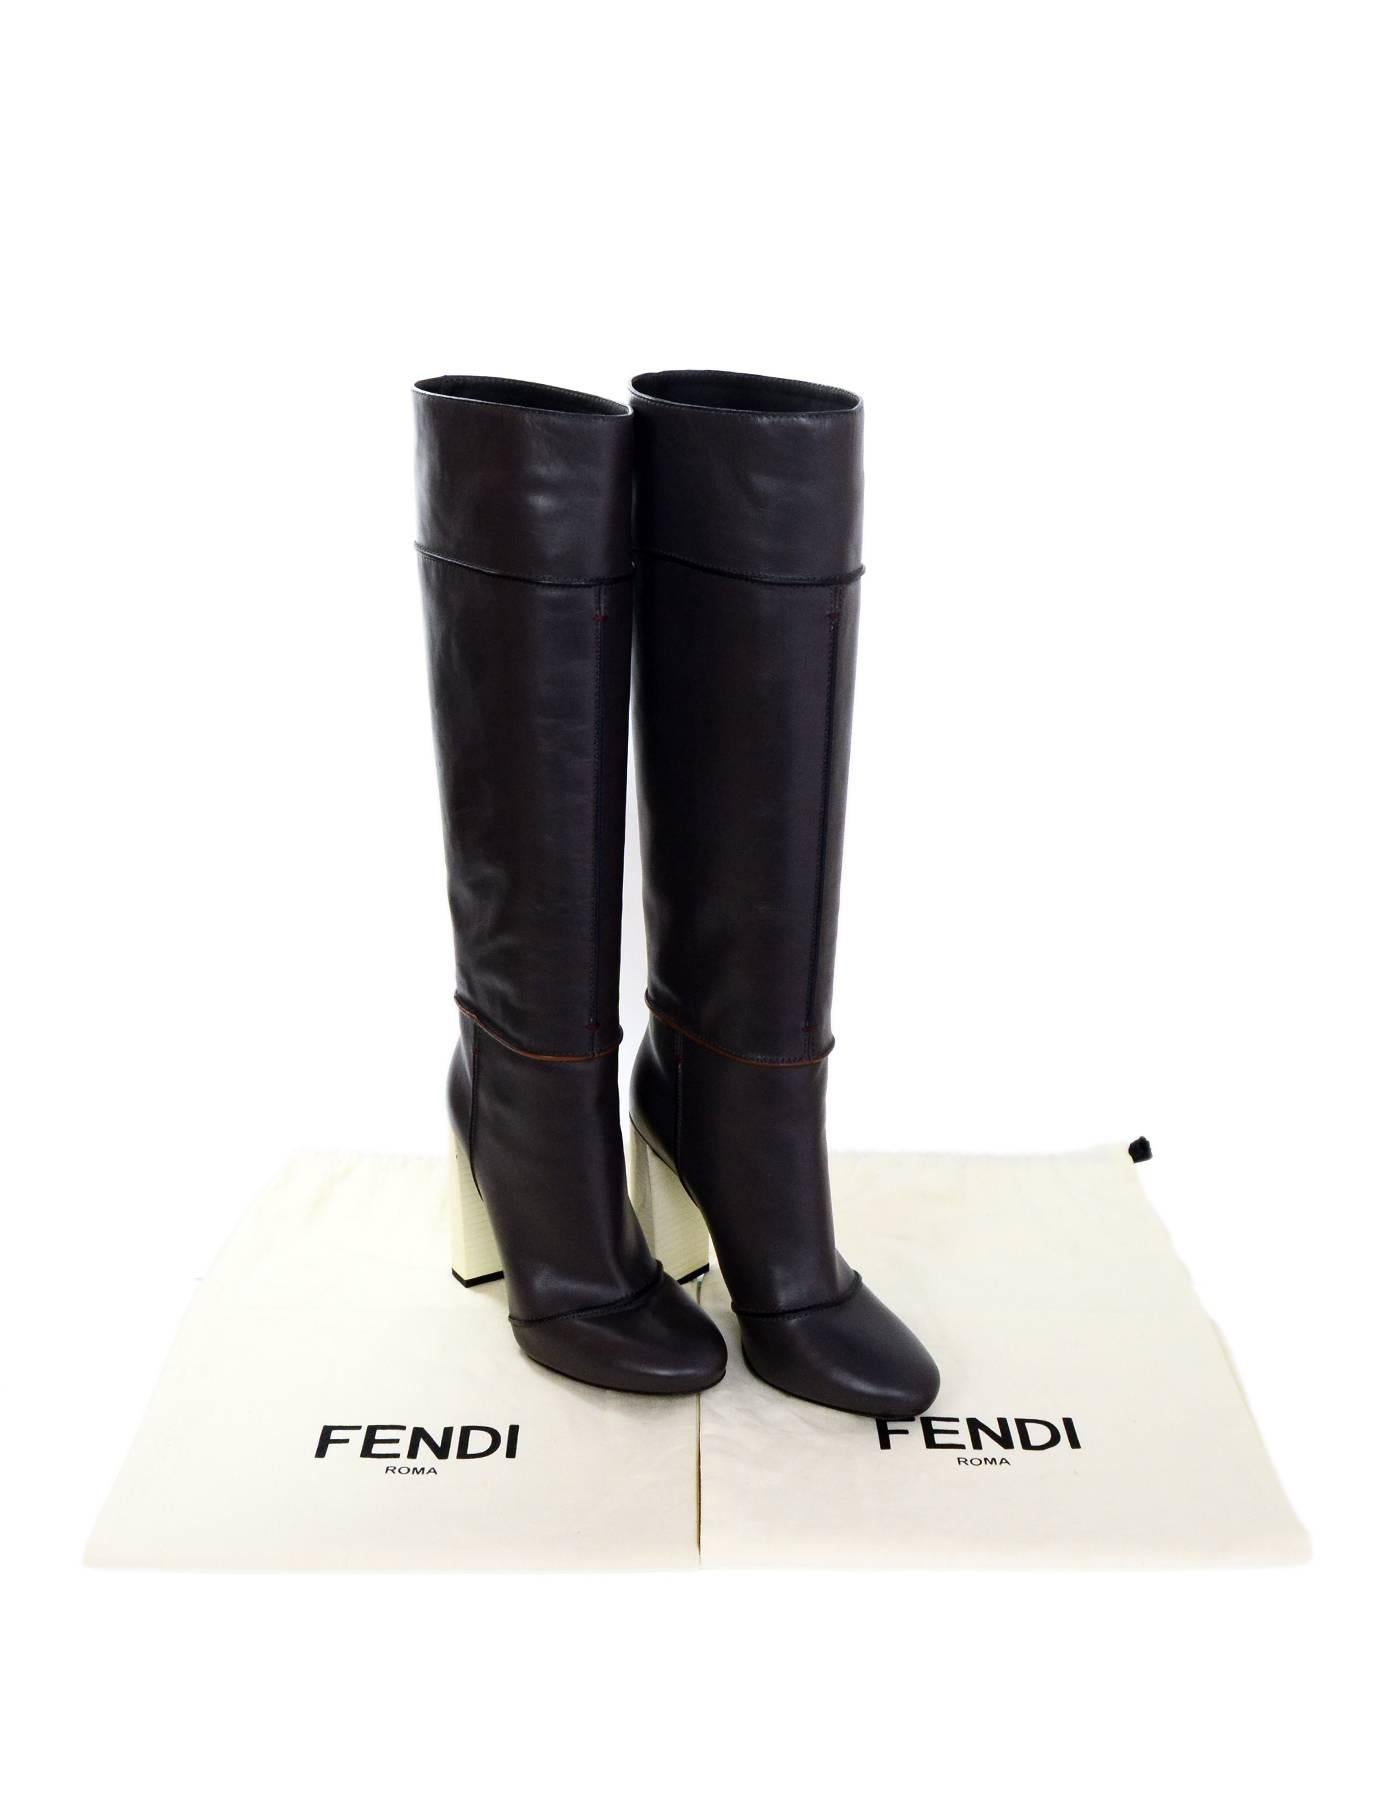 Fendi Grey Leather Mikado Knee High Boots sz 39 w/2 DB rt. $1, 550 2